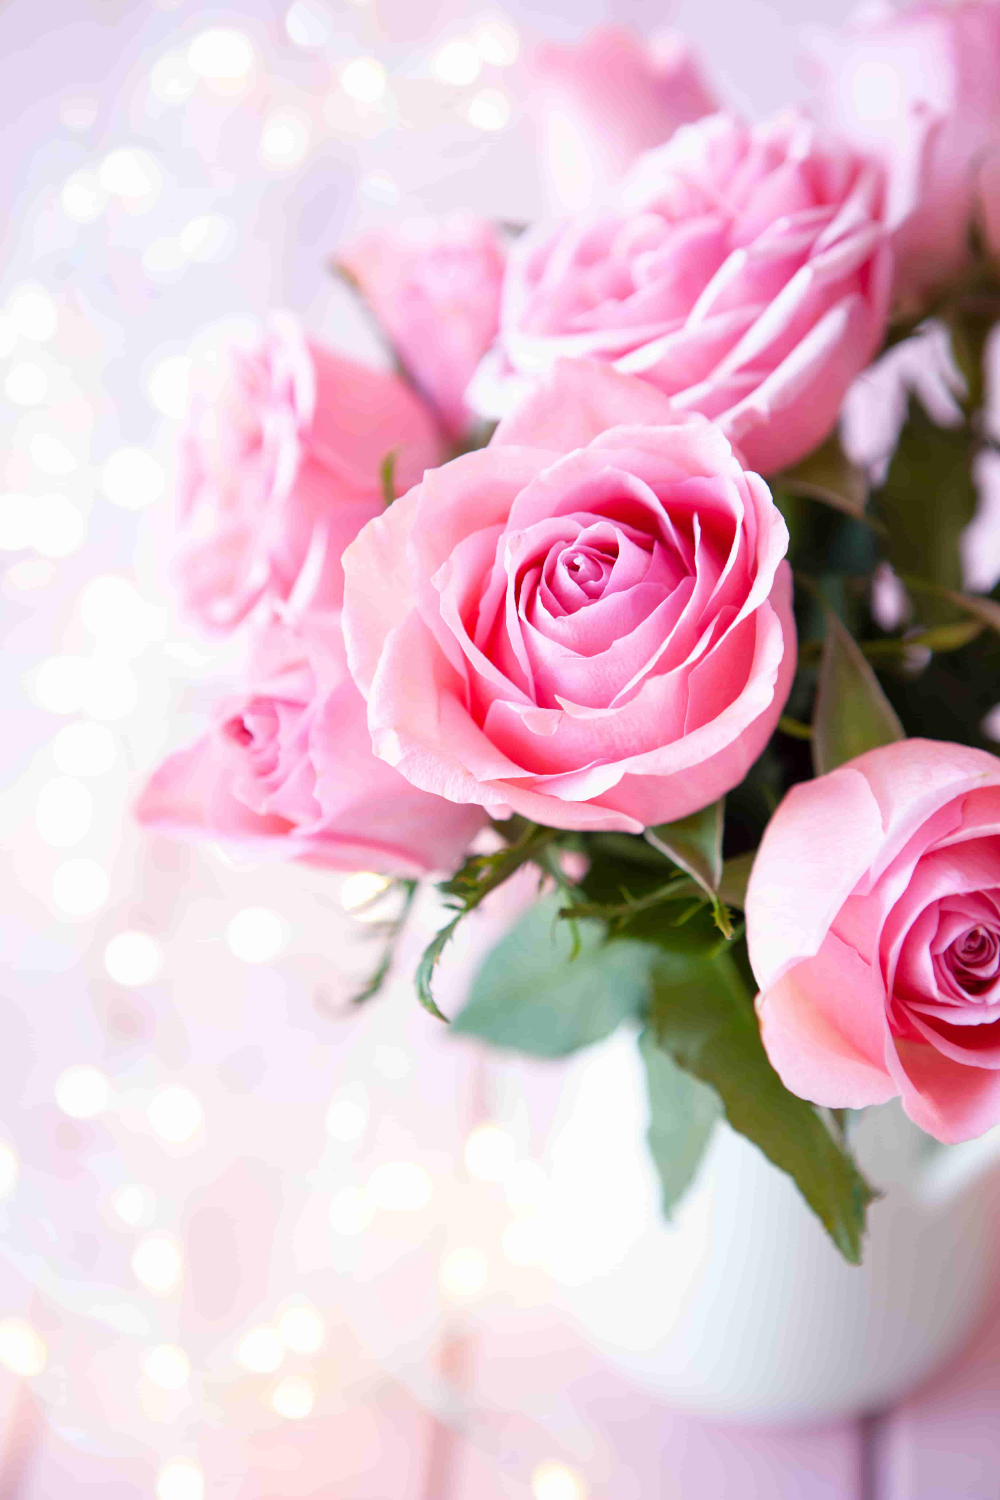 Pink rose wallpaper in HD for mobile #pinkrose #rose #wallpaper. Love rose flower, White rose flower, Rose image